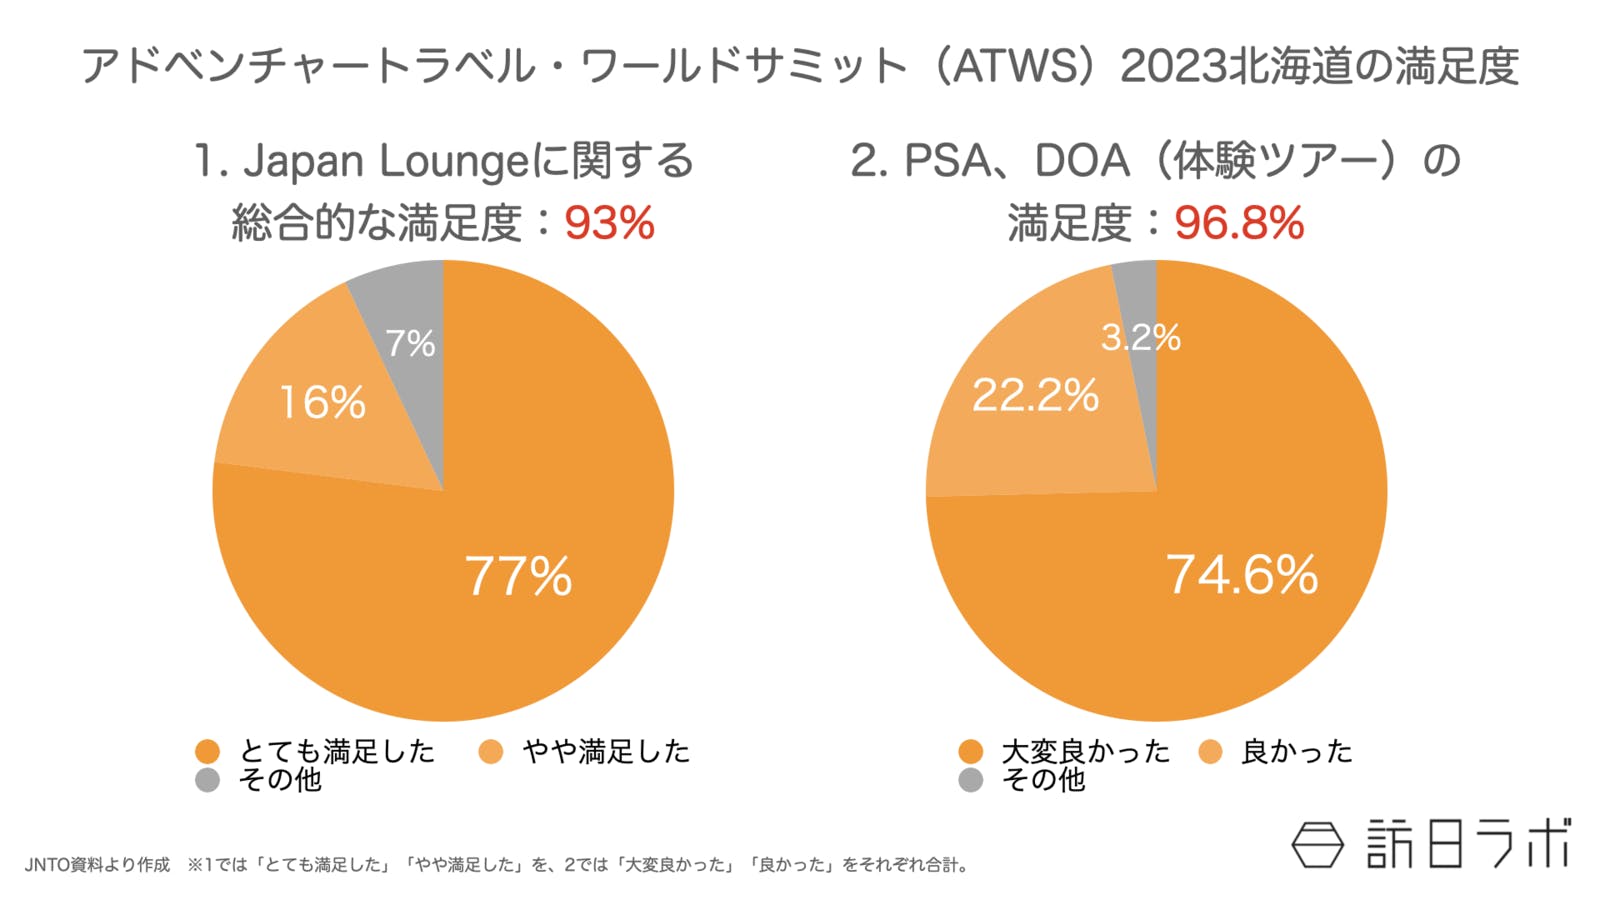 ATWS 日本 2023 北海道 満足度